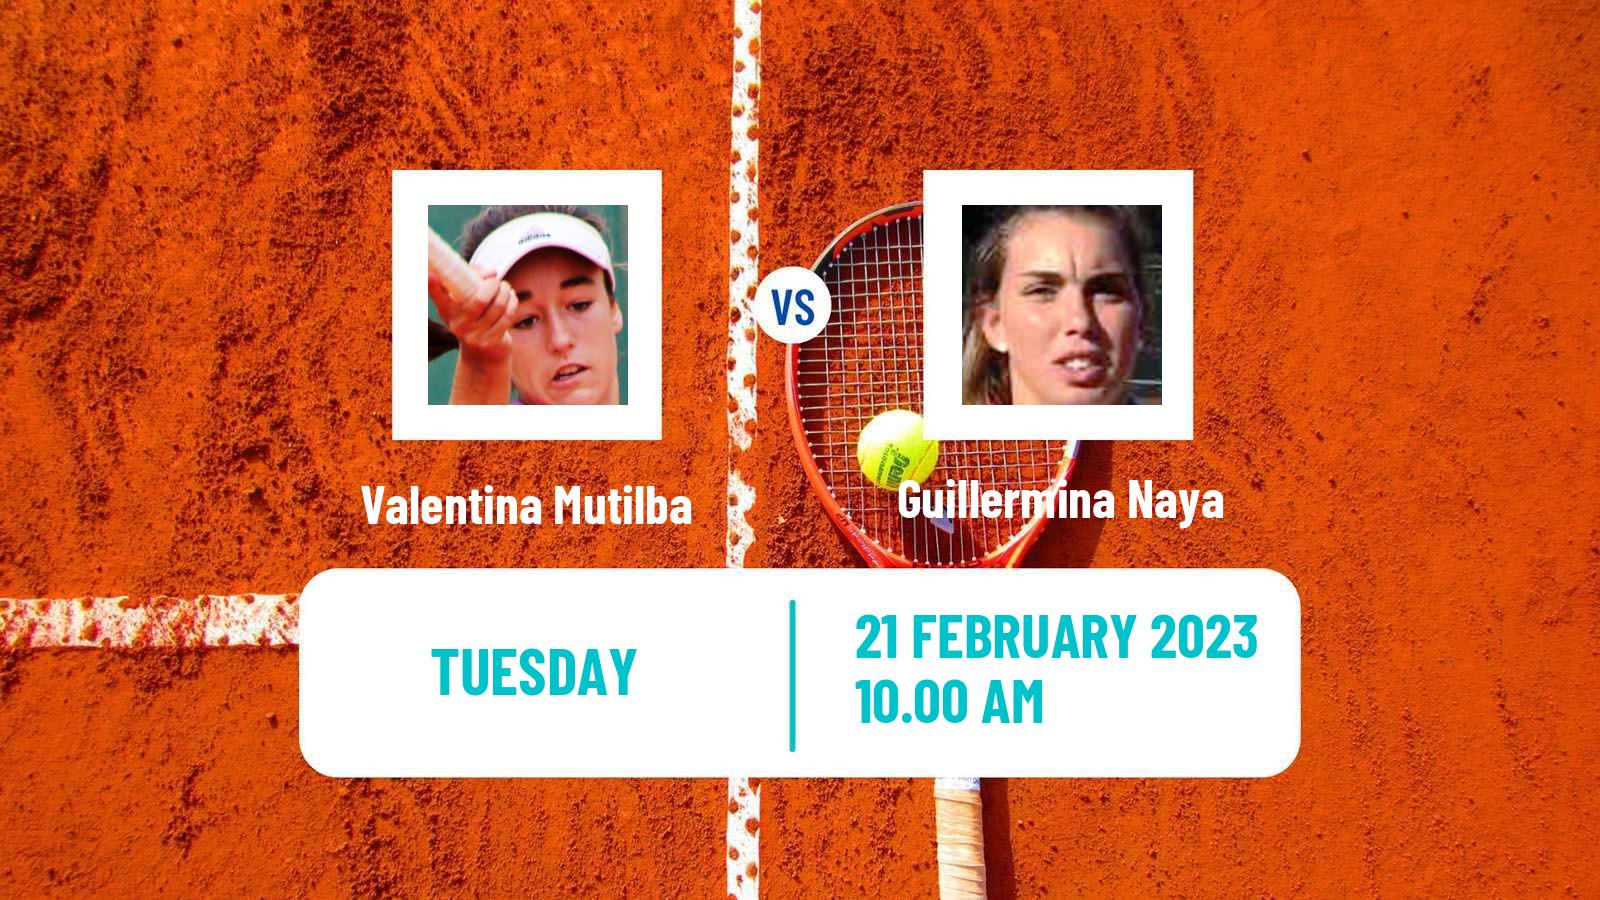 Tennis ITF Tournaments Valentina Mutilba - Guillermina Naya